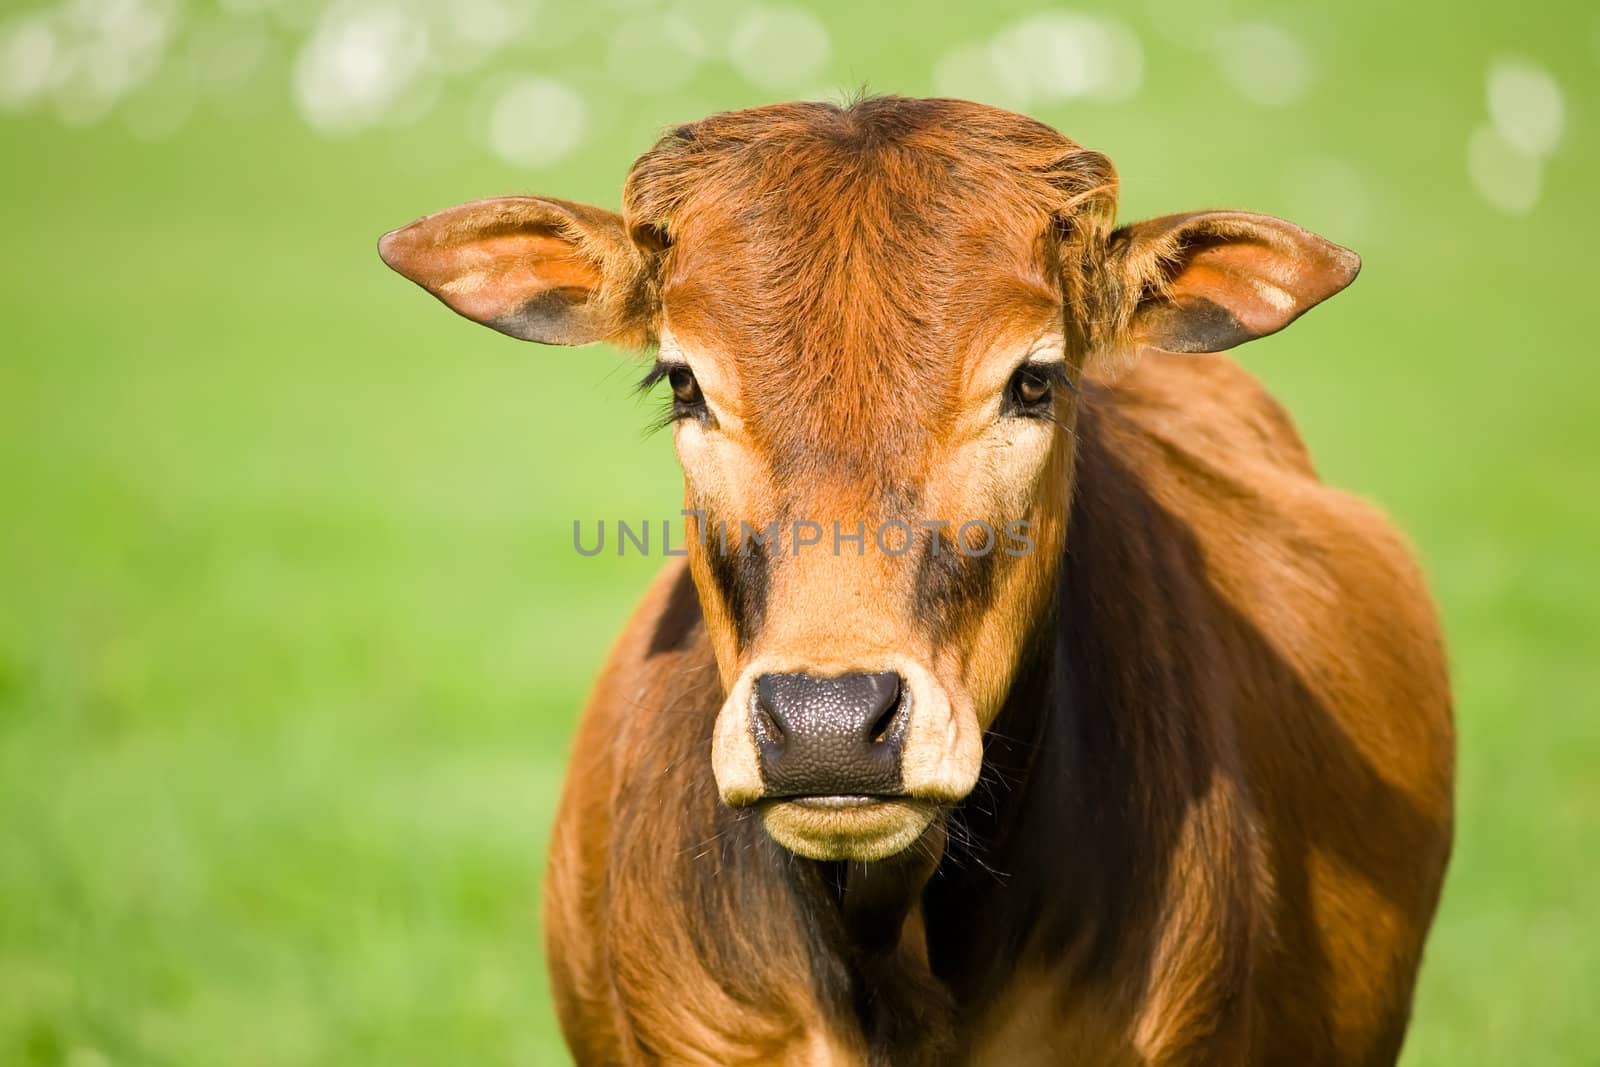 zebu calf by nubephoto